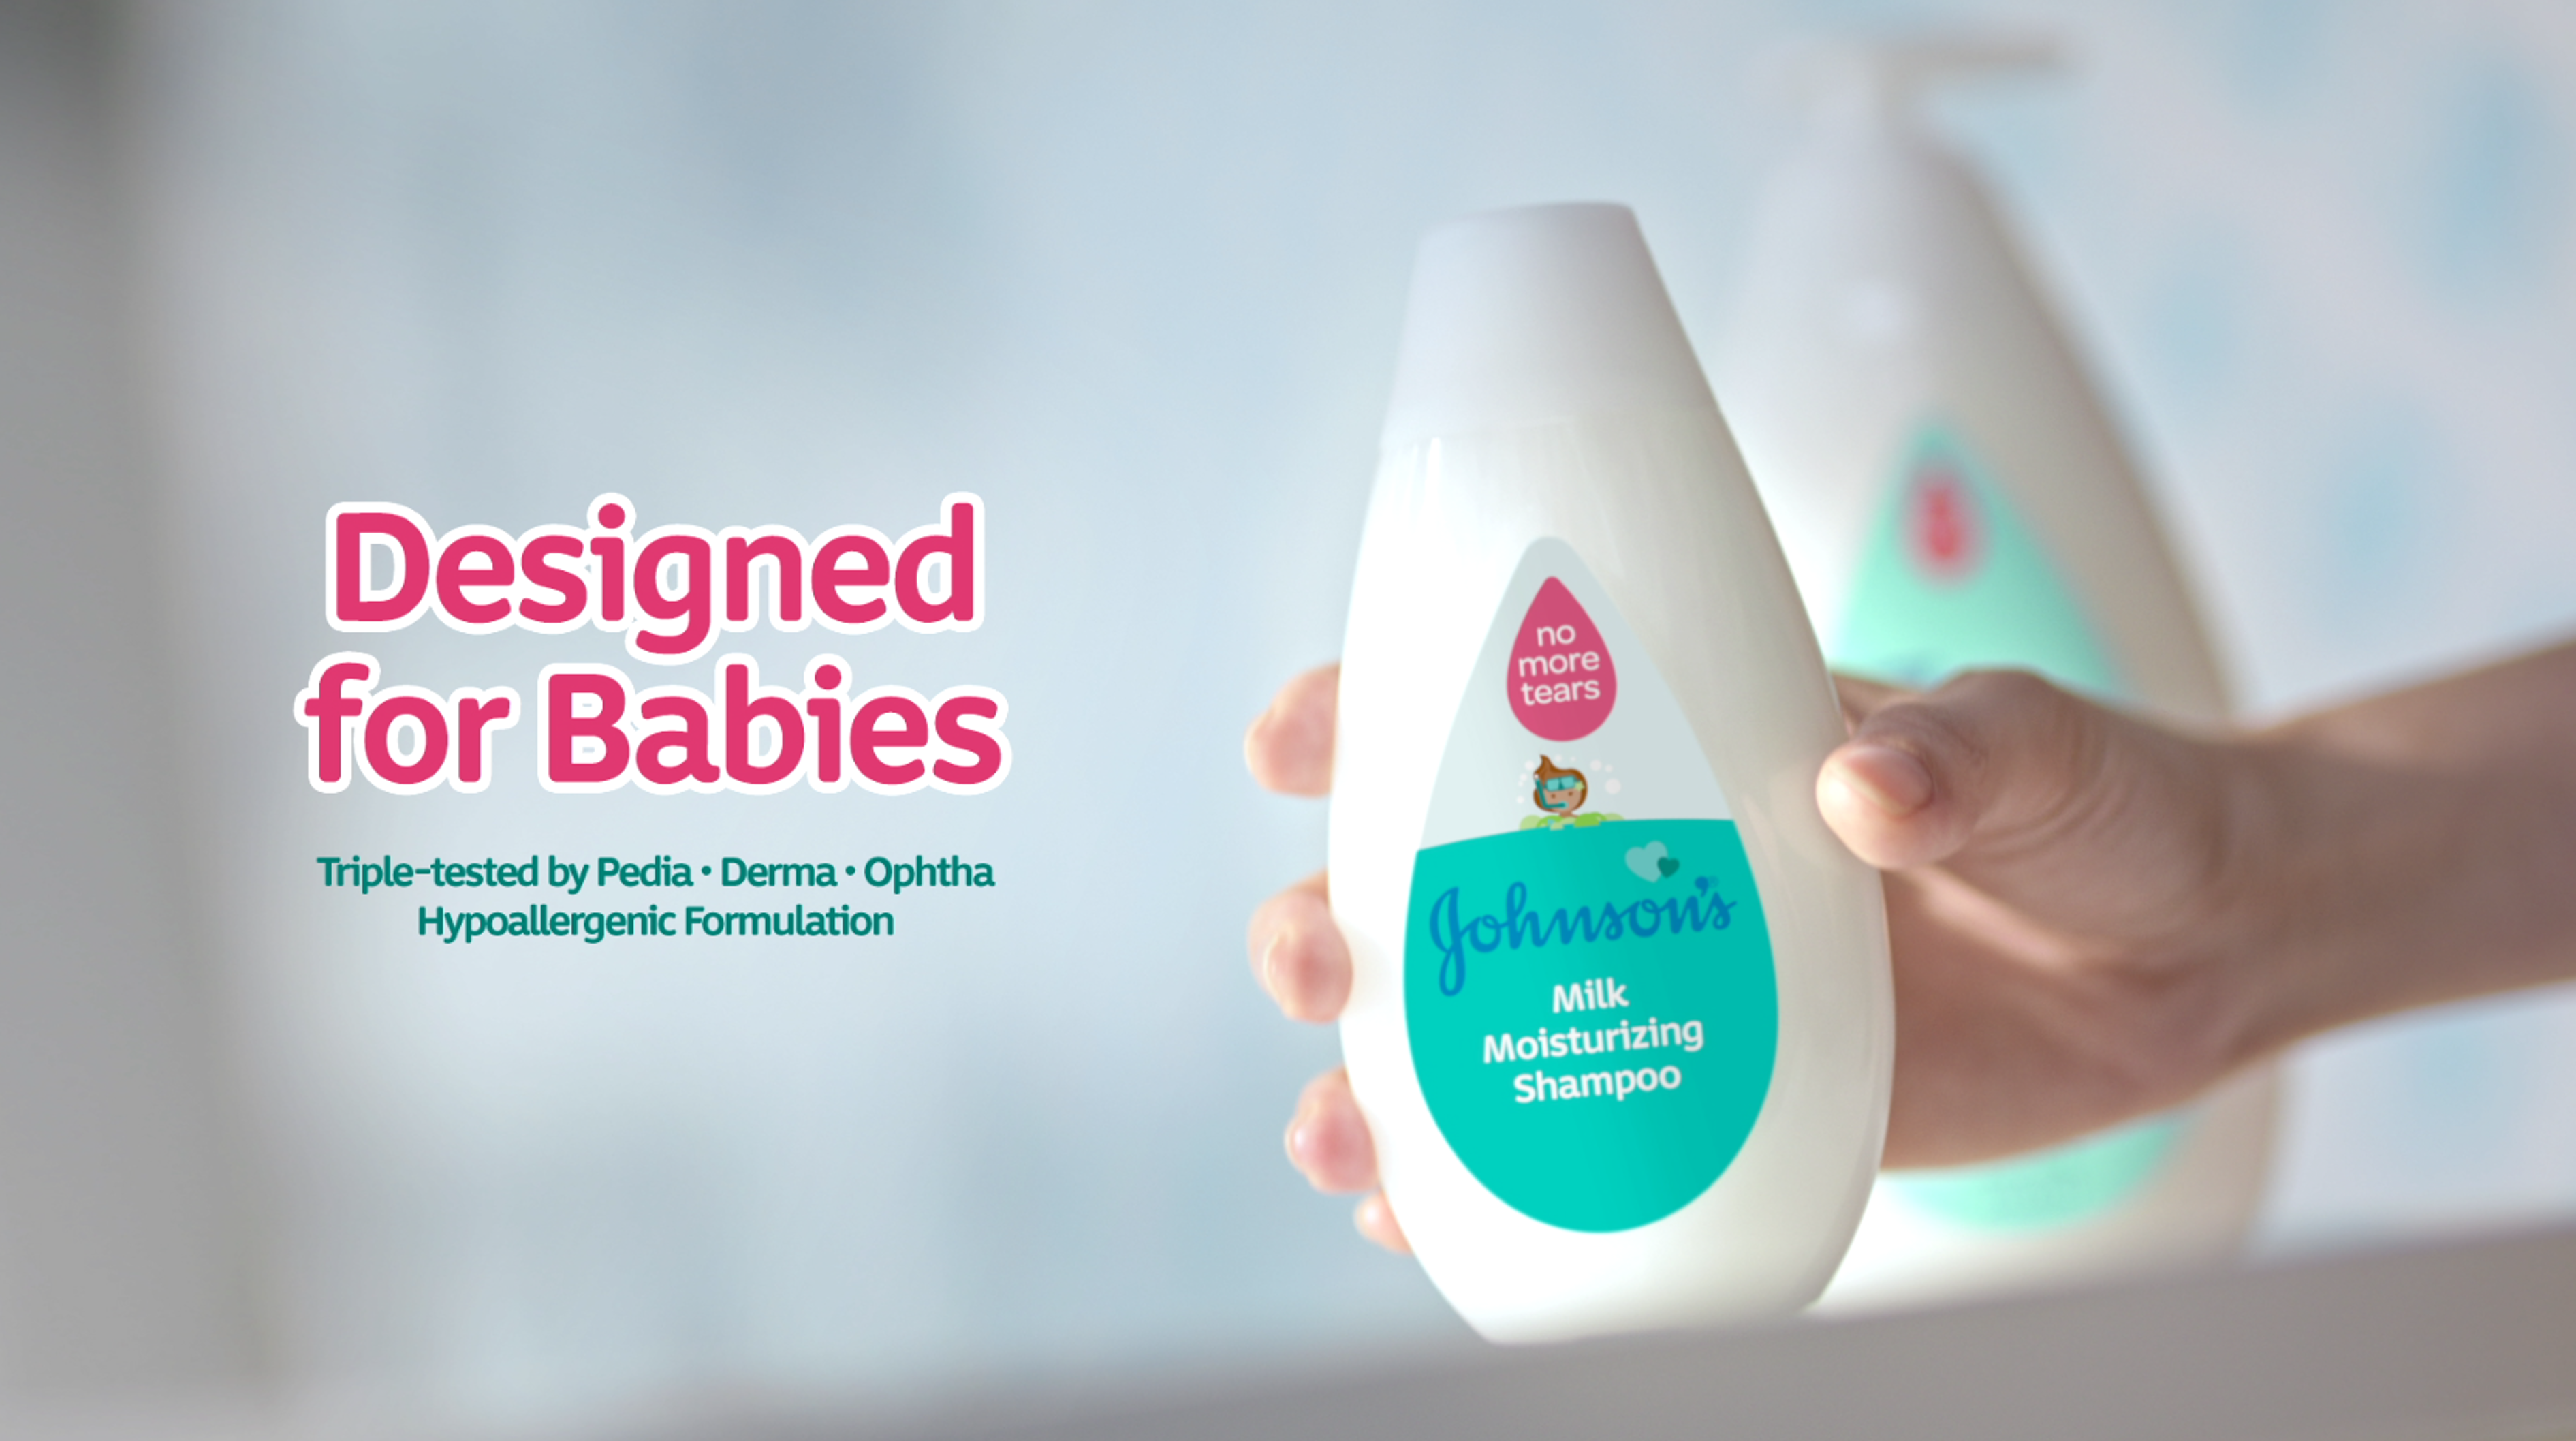 Johnson’s Baby launches newest Milk Moisturizing Shampoo para Iwas Asim ang Hair ni Baby